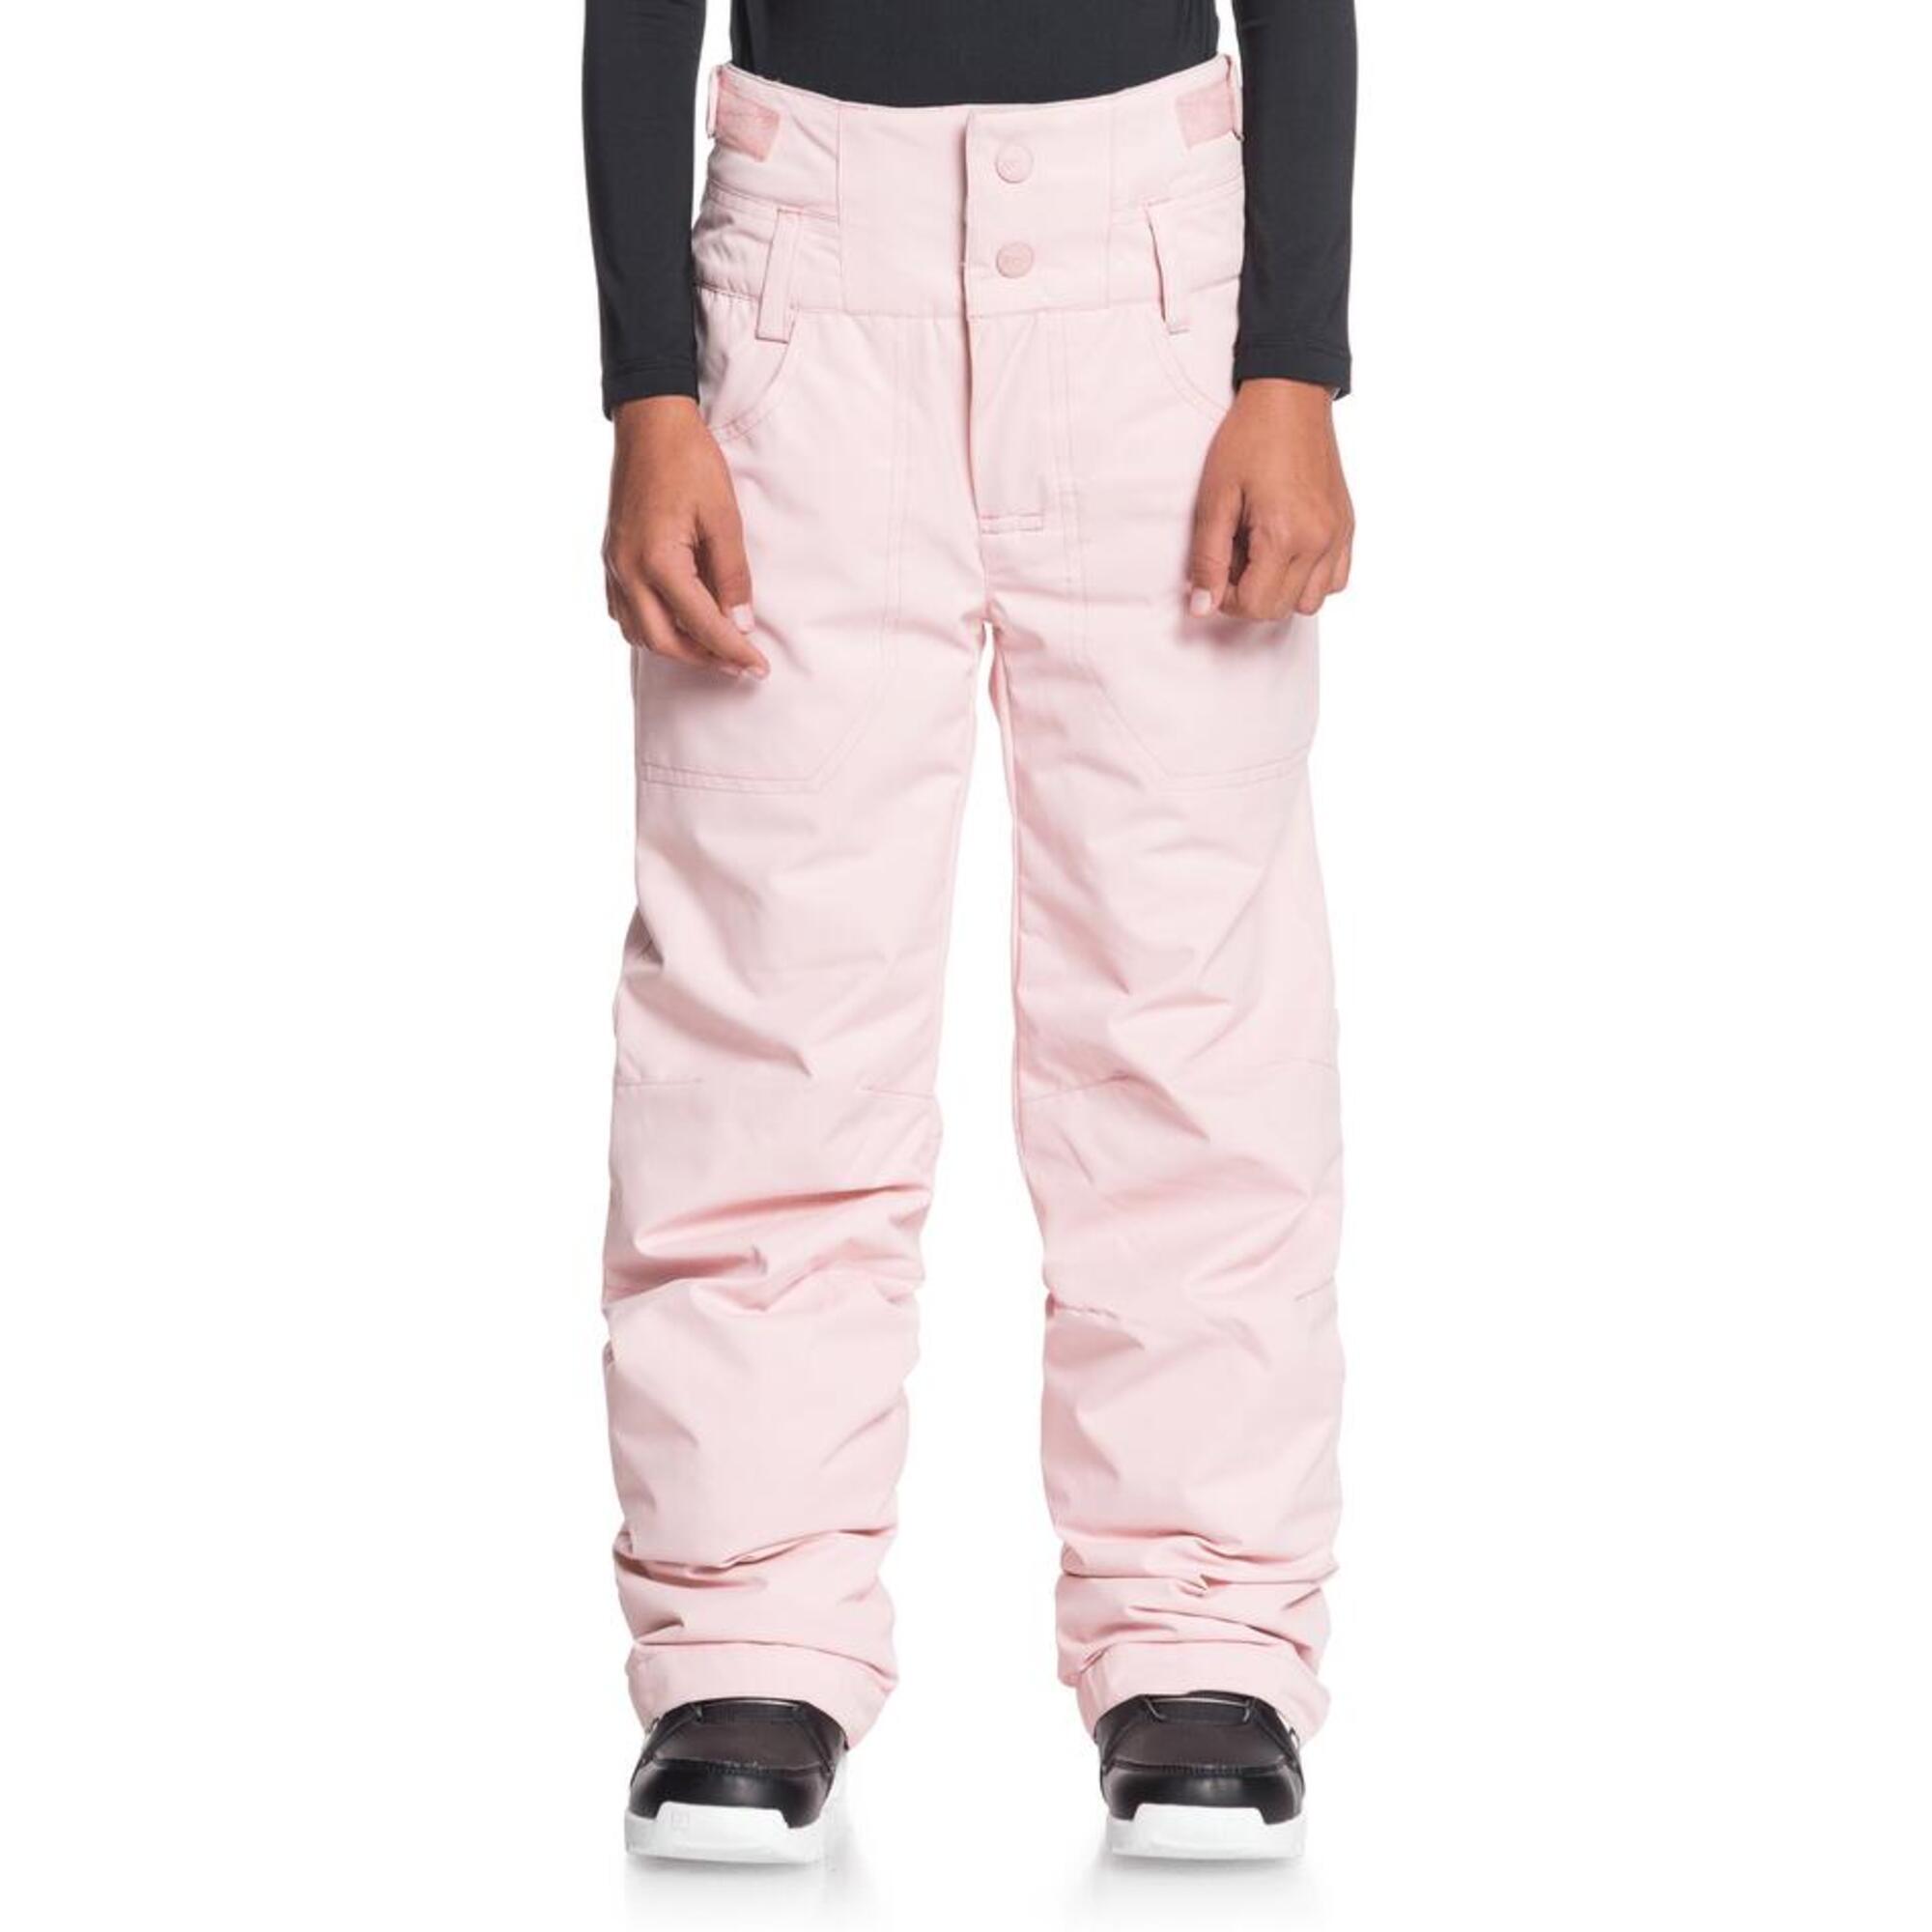 G Diversion Girl Pant - Pantalon - rose - hommes - Ski alpin